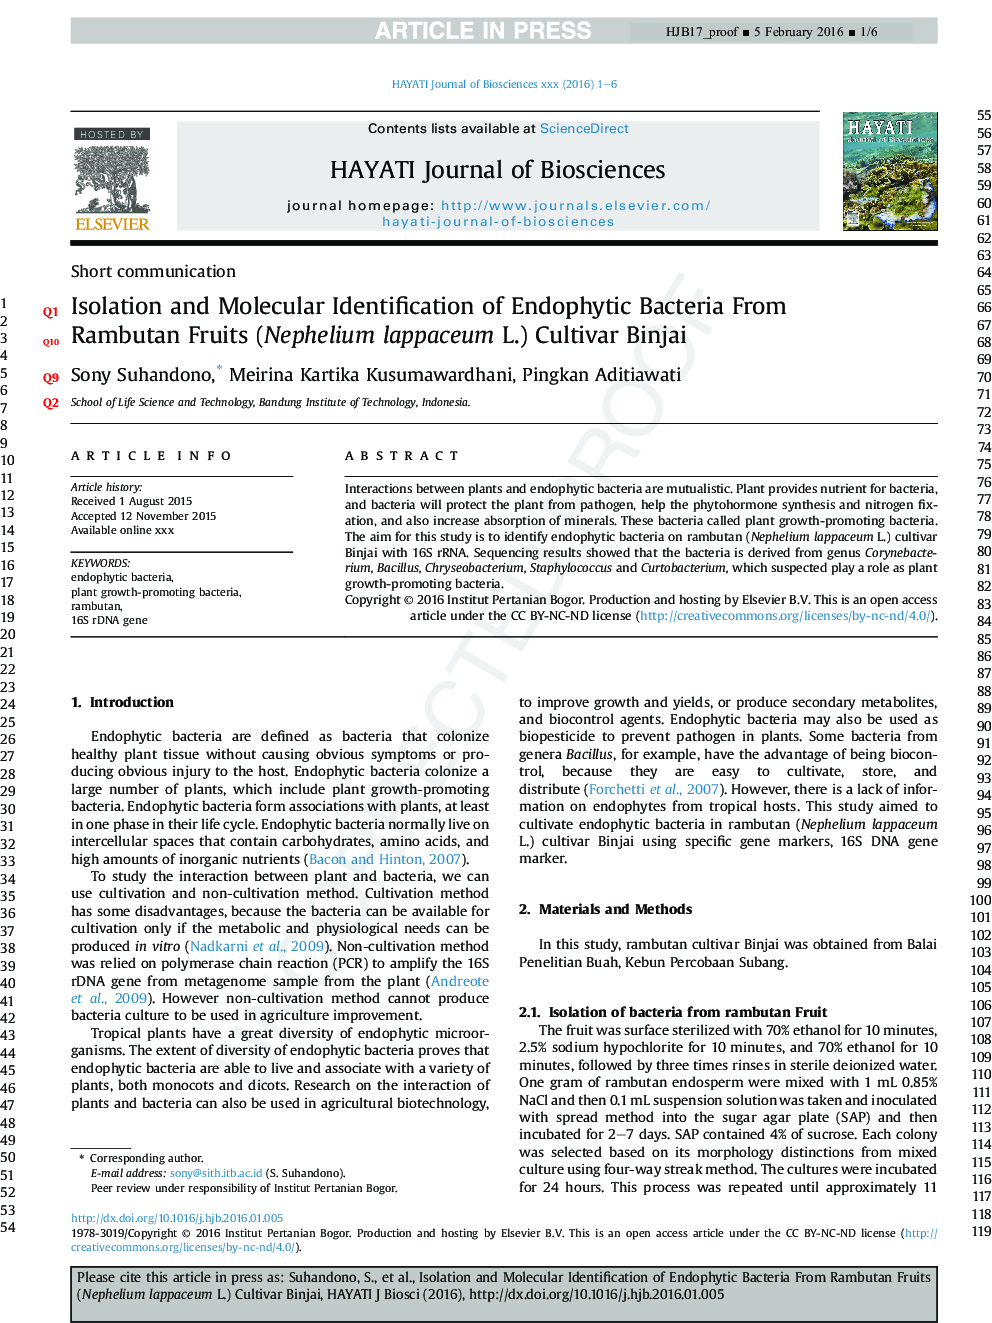 Isolation and Molecular Identification of Endophytic Bacteria From Rambutan Fruits (Nephelium lappaceum L.) Cultivar Binjai